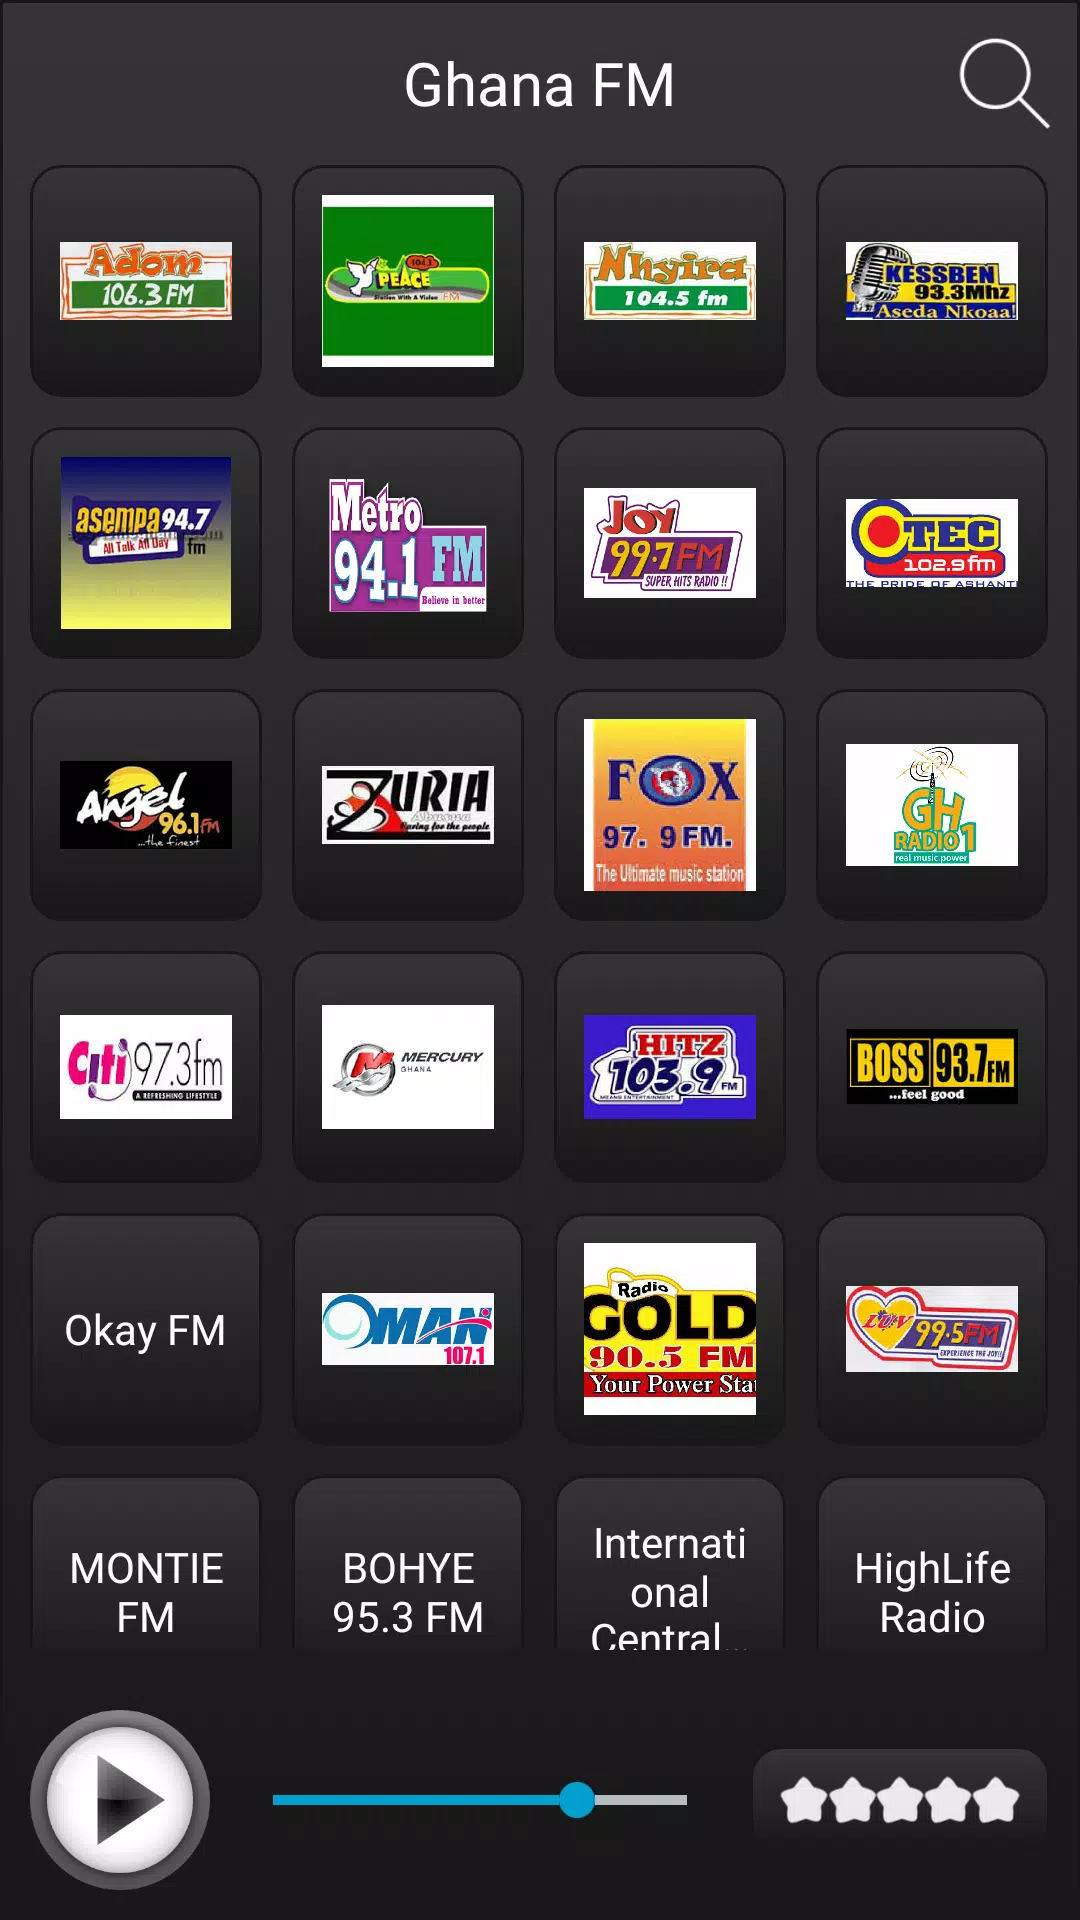 Ghana Radio Stations Online - Ghana FM AM Internet APK for Android Download